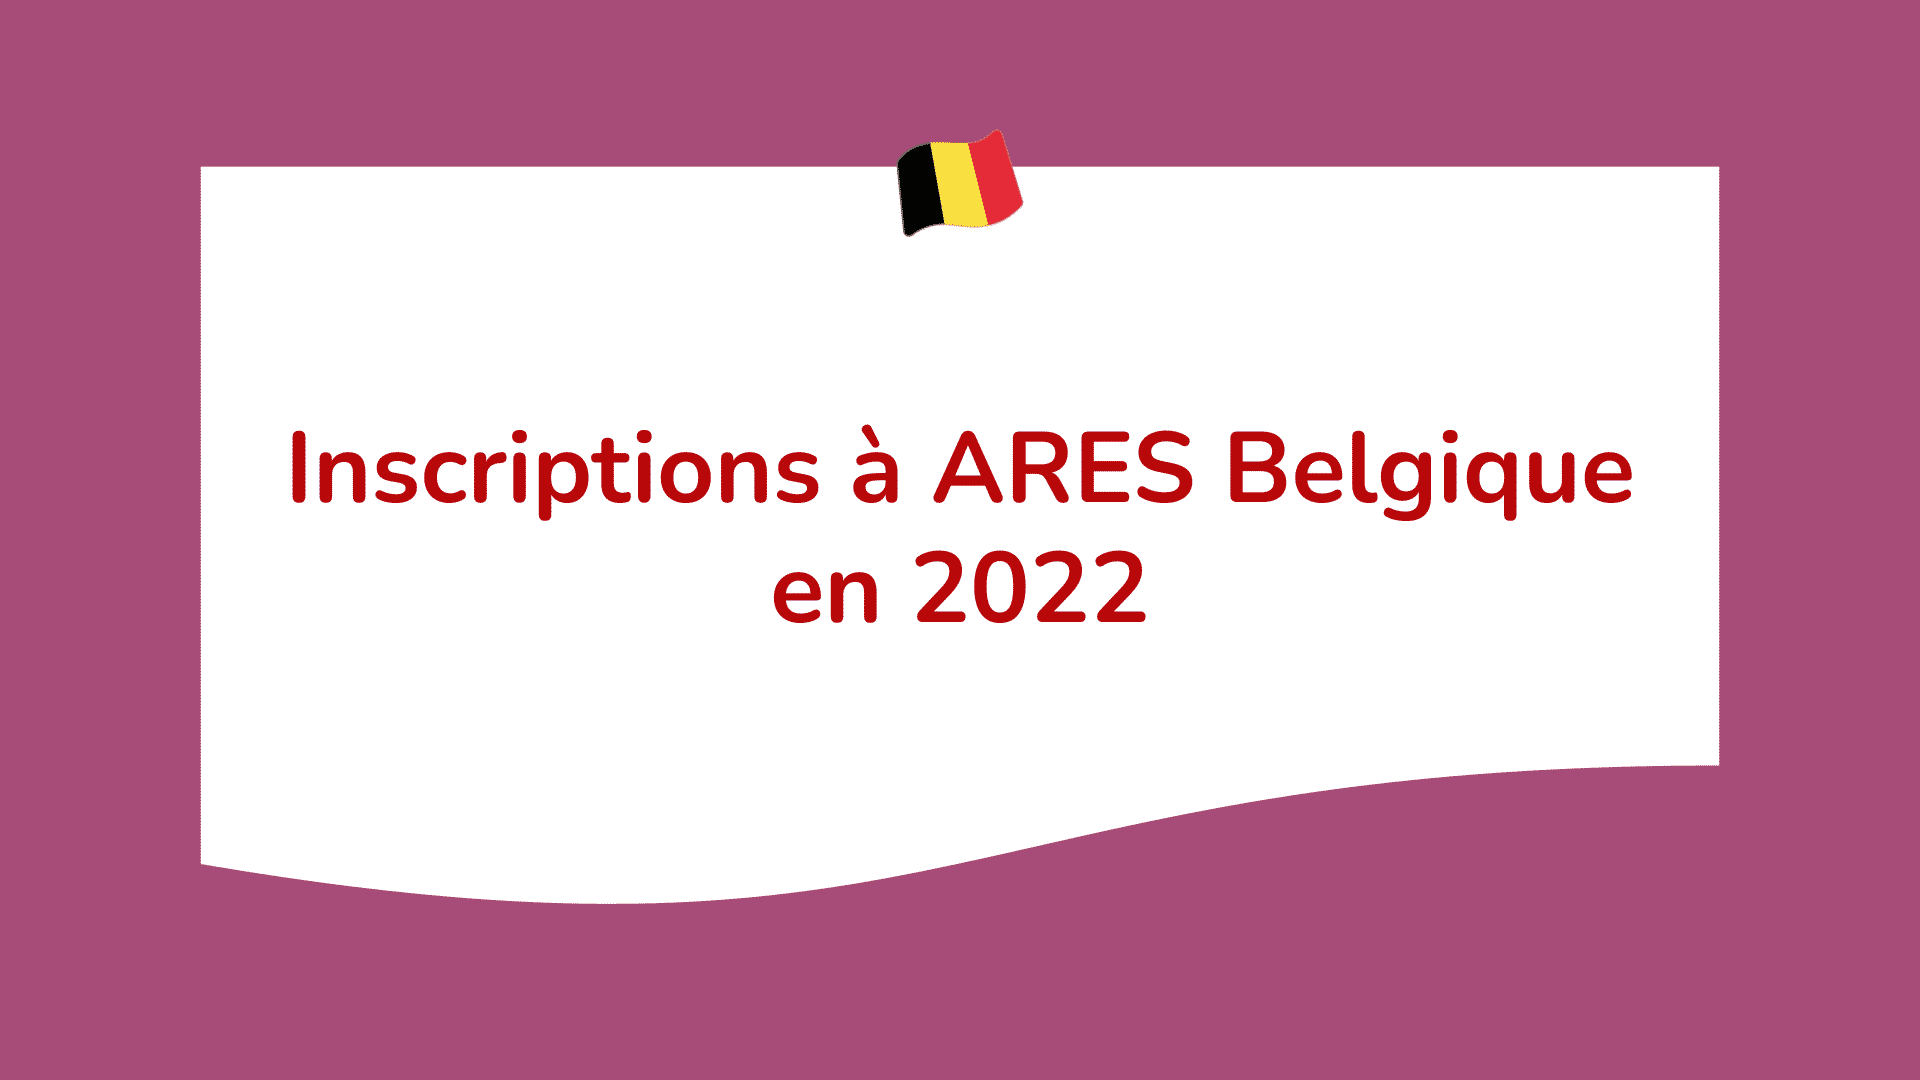 ARES Belgique